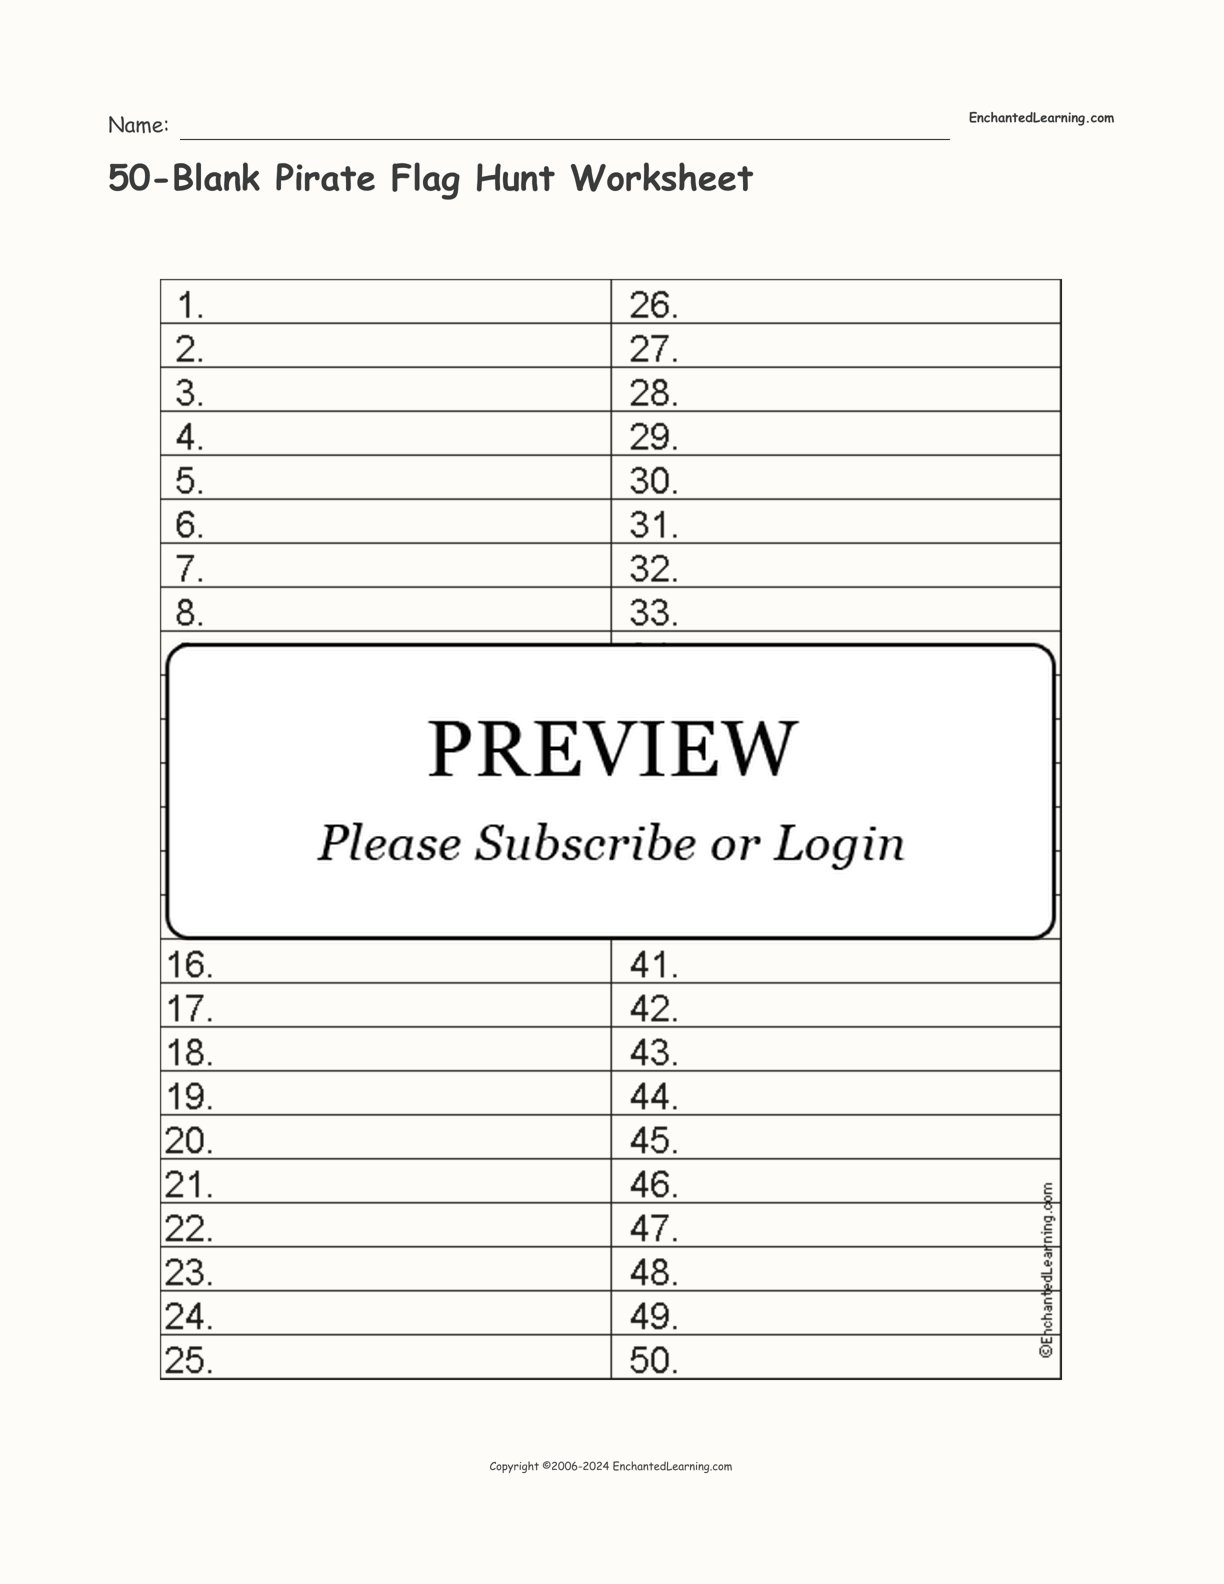 50-Blank Pirate Flag Hunt Worksheet interactive worksheet page 1